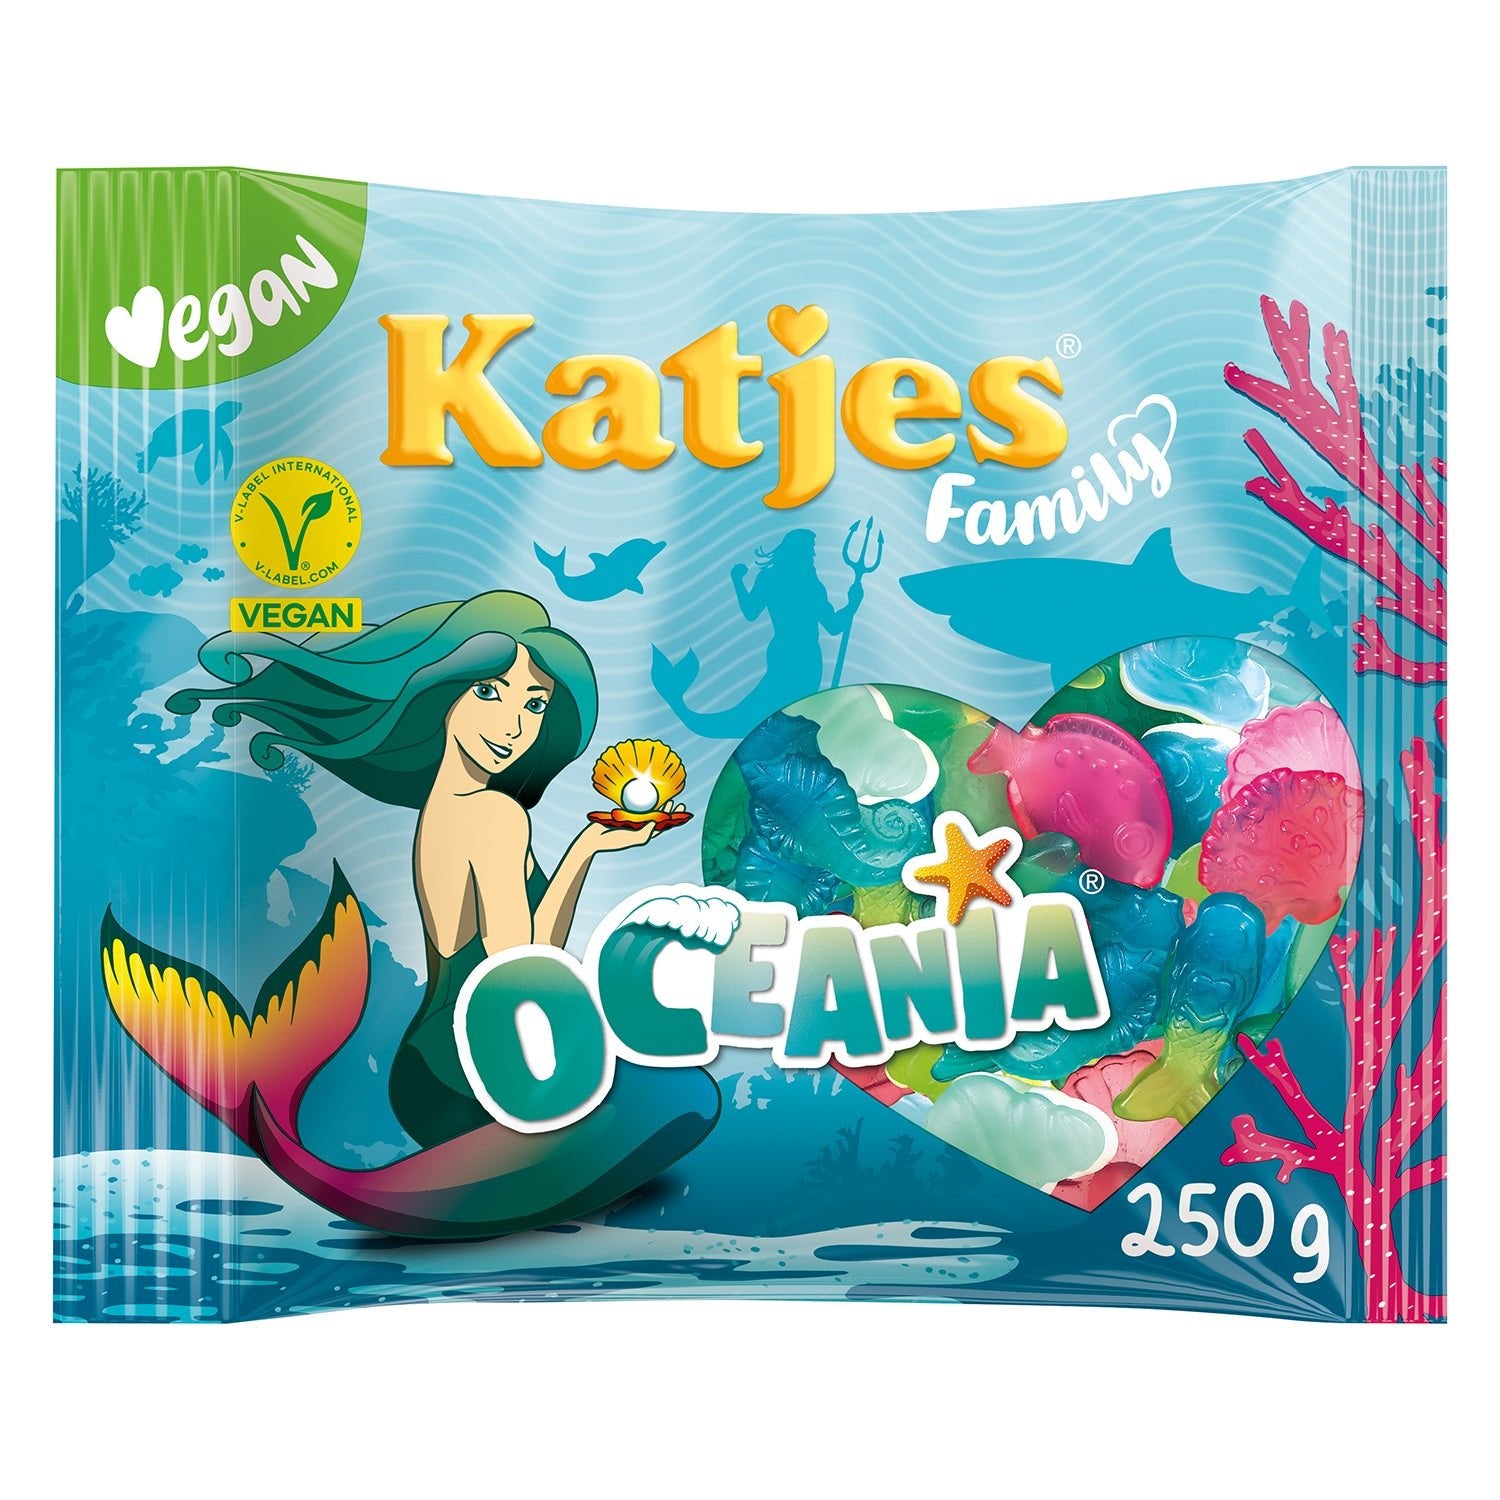 Katjes Family Oceania 250g - Candyshop.ch